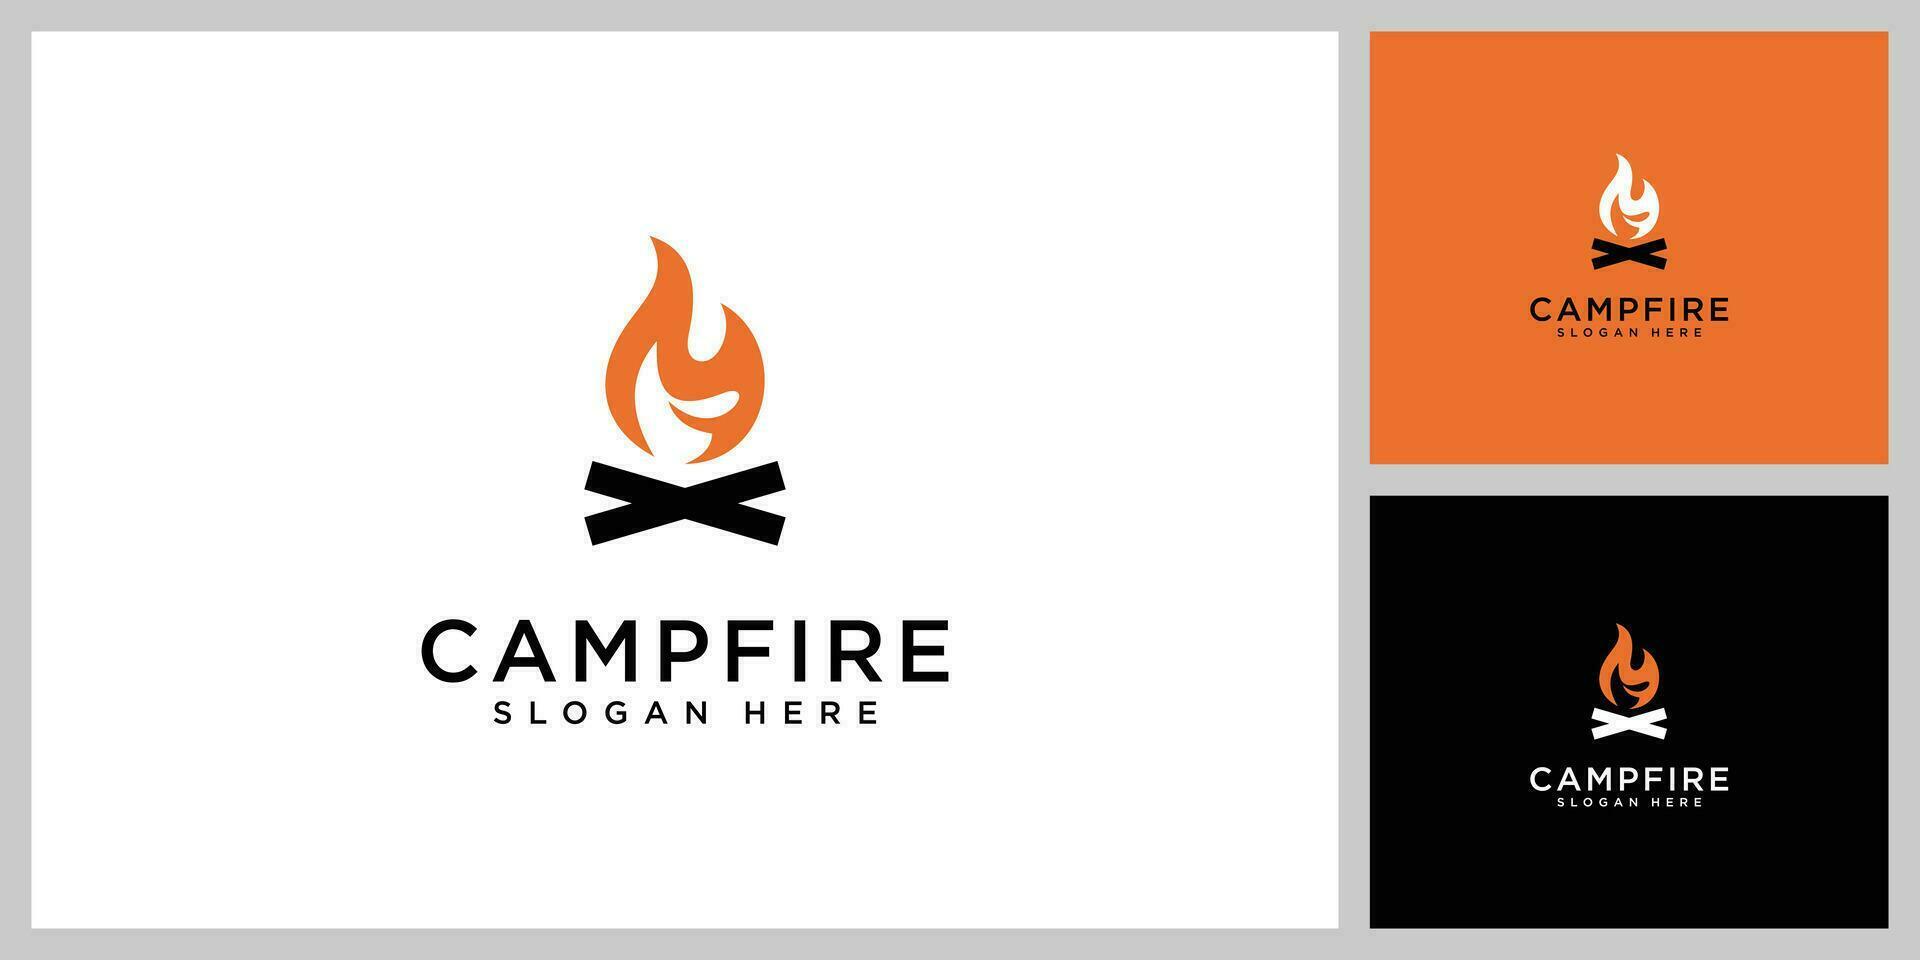 Campfire Vector template designs